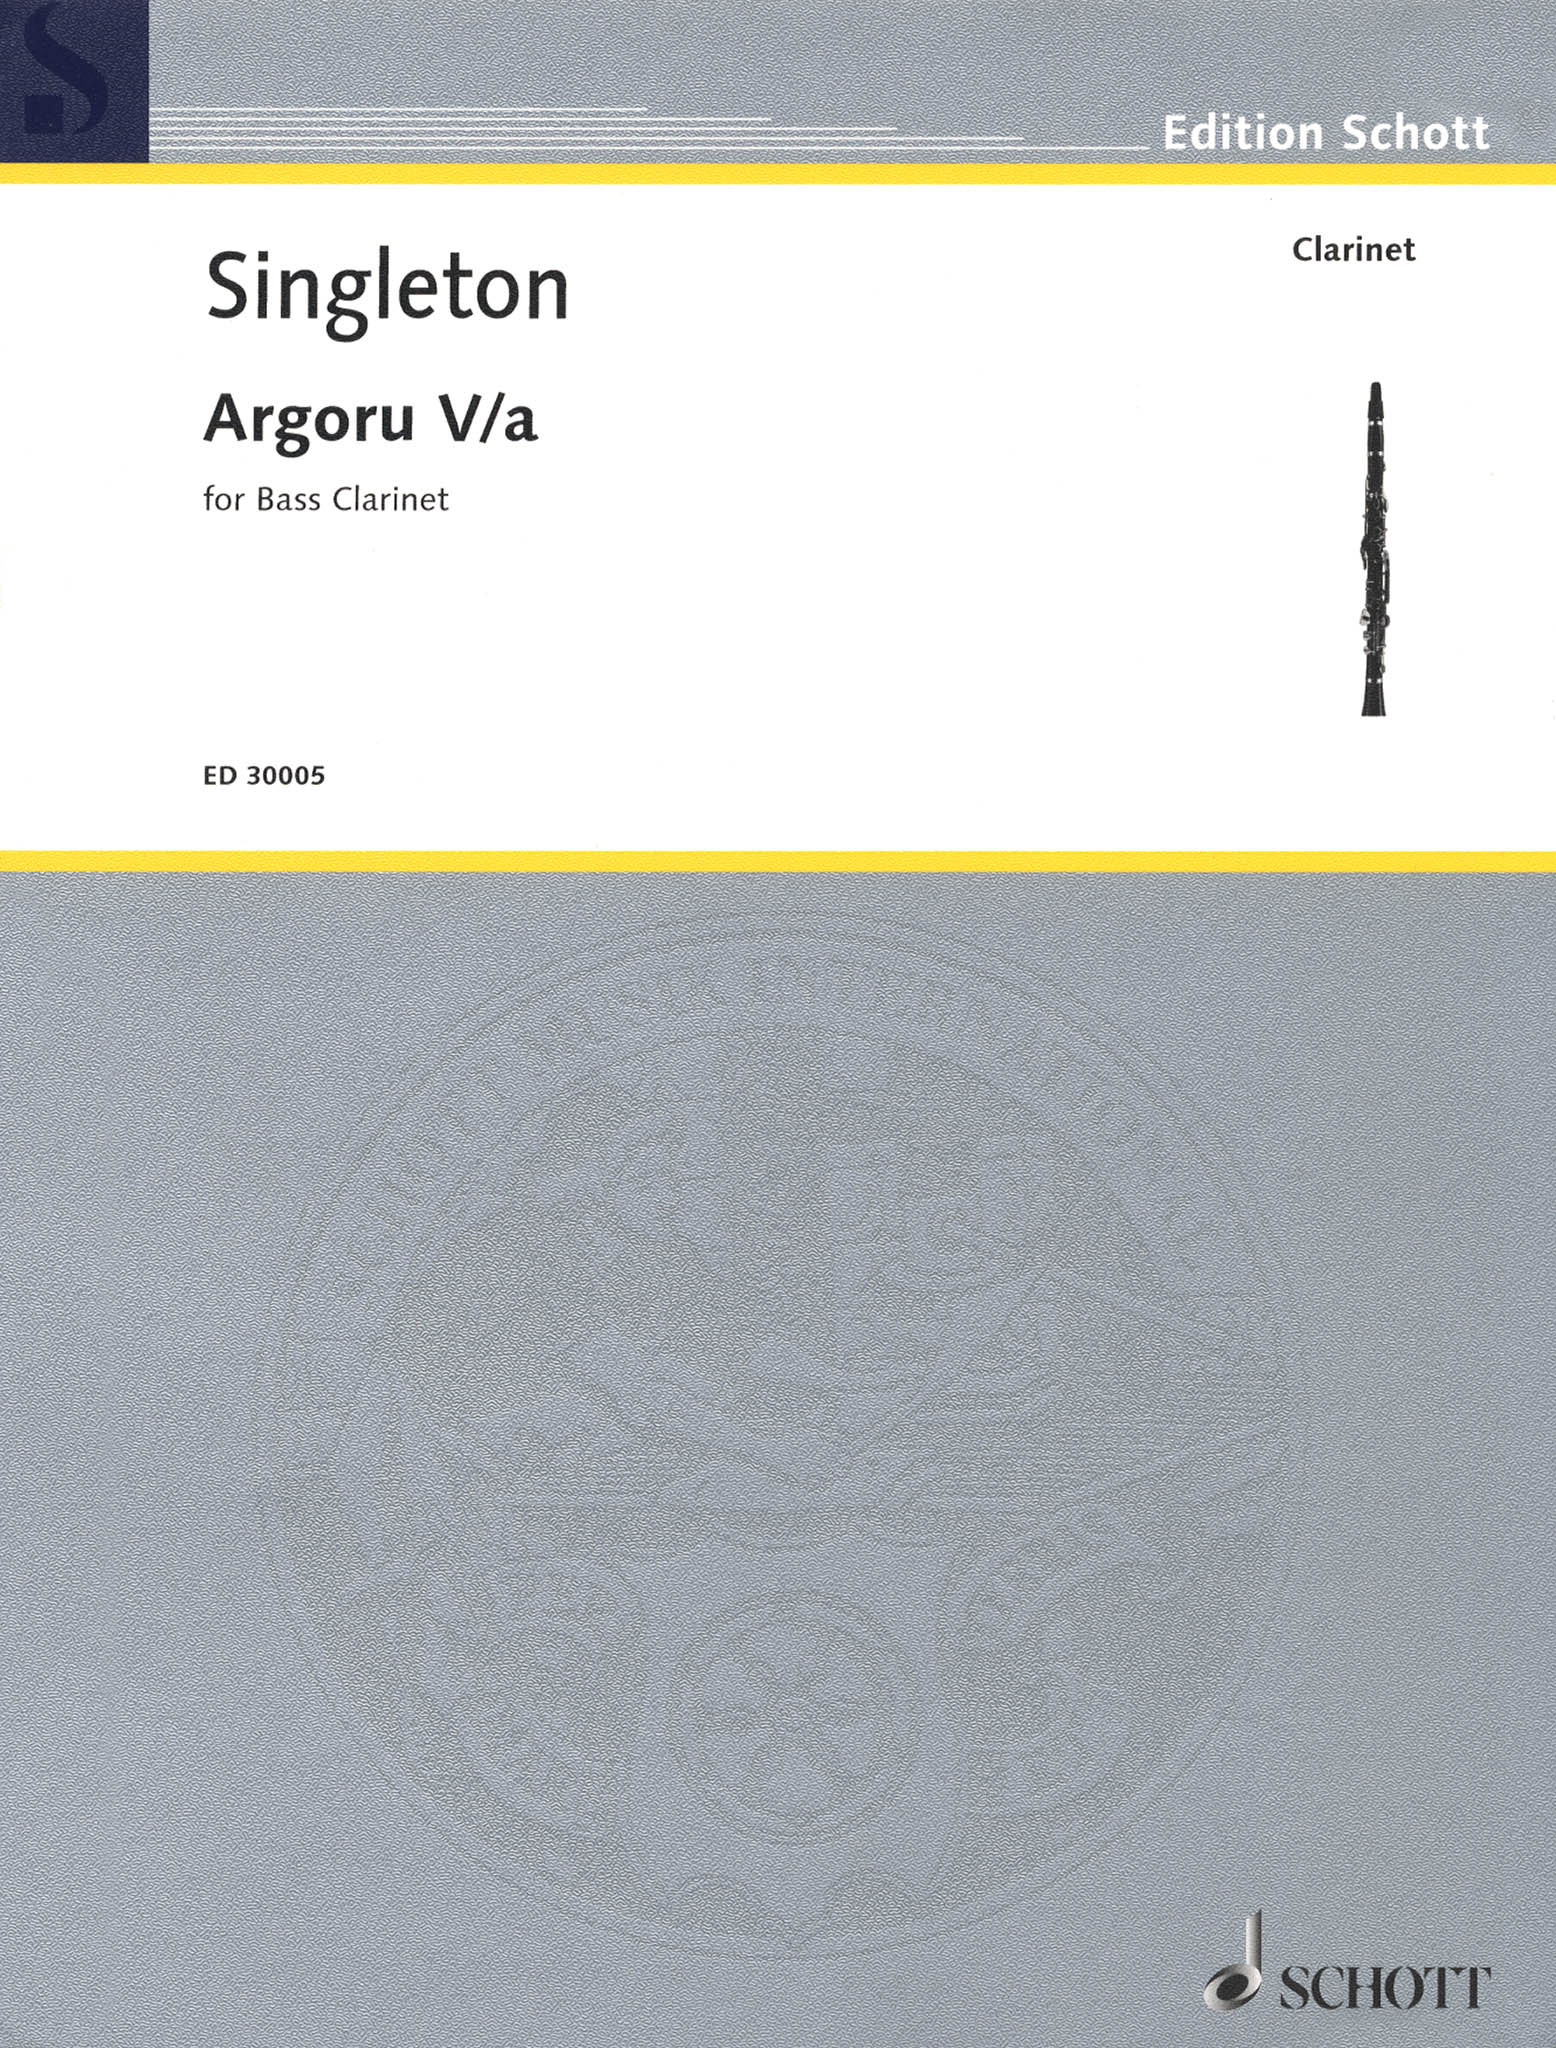 Alvin Singleton Argoru V/a for bass clarinet Cover